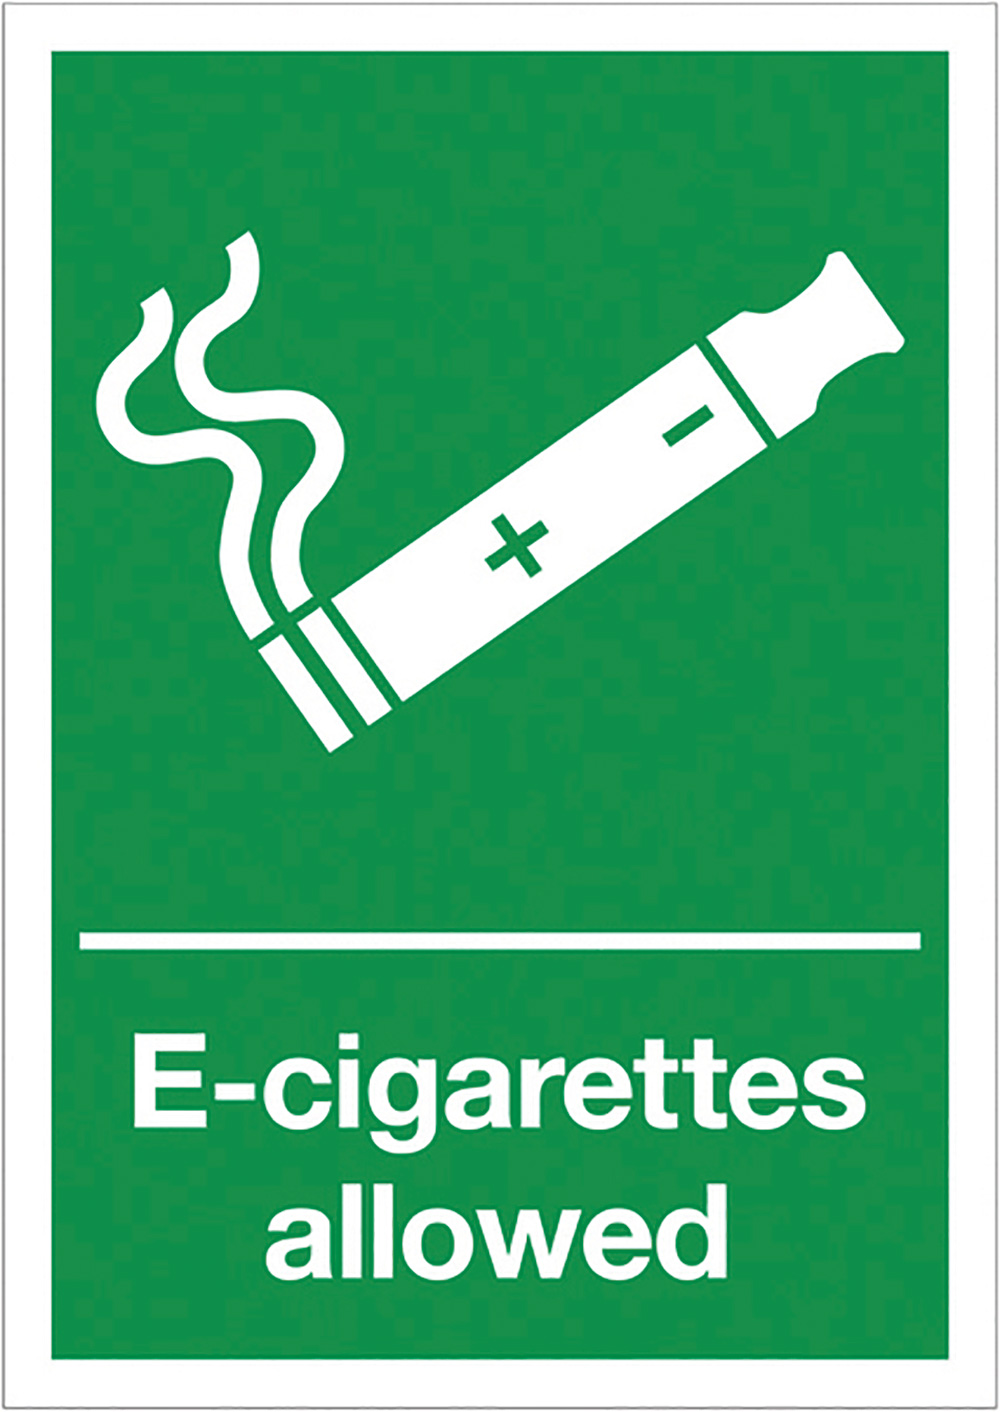 E-Cigarettes allowed  297x210mm 1.2mm Rigid Plastic Safety Sign  